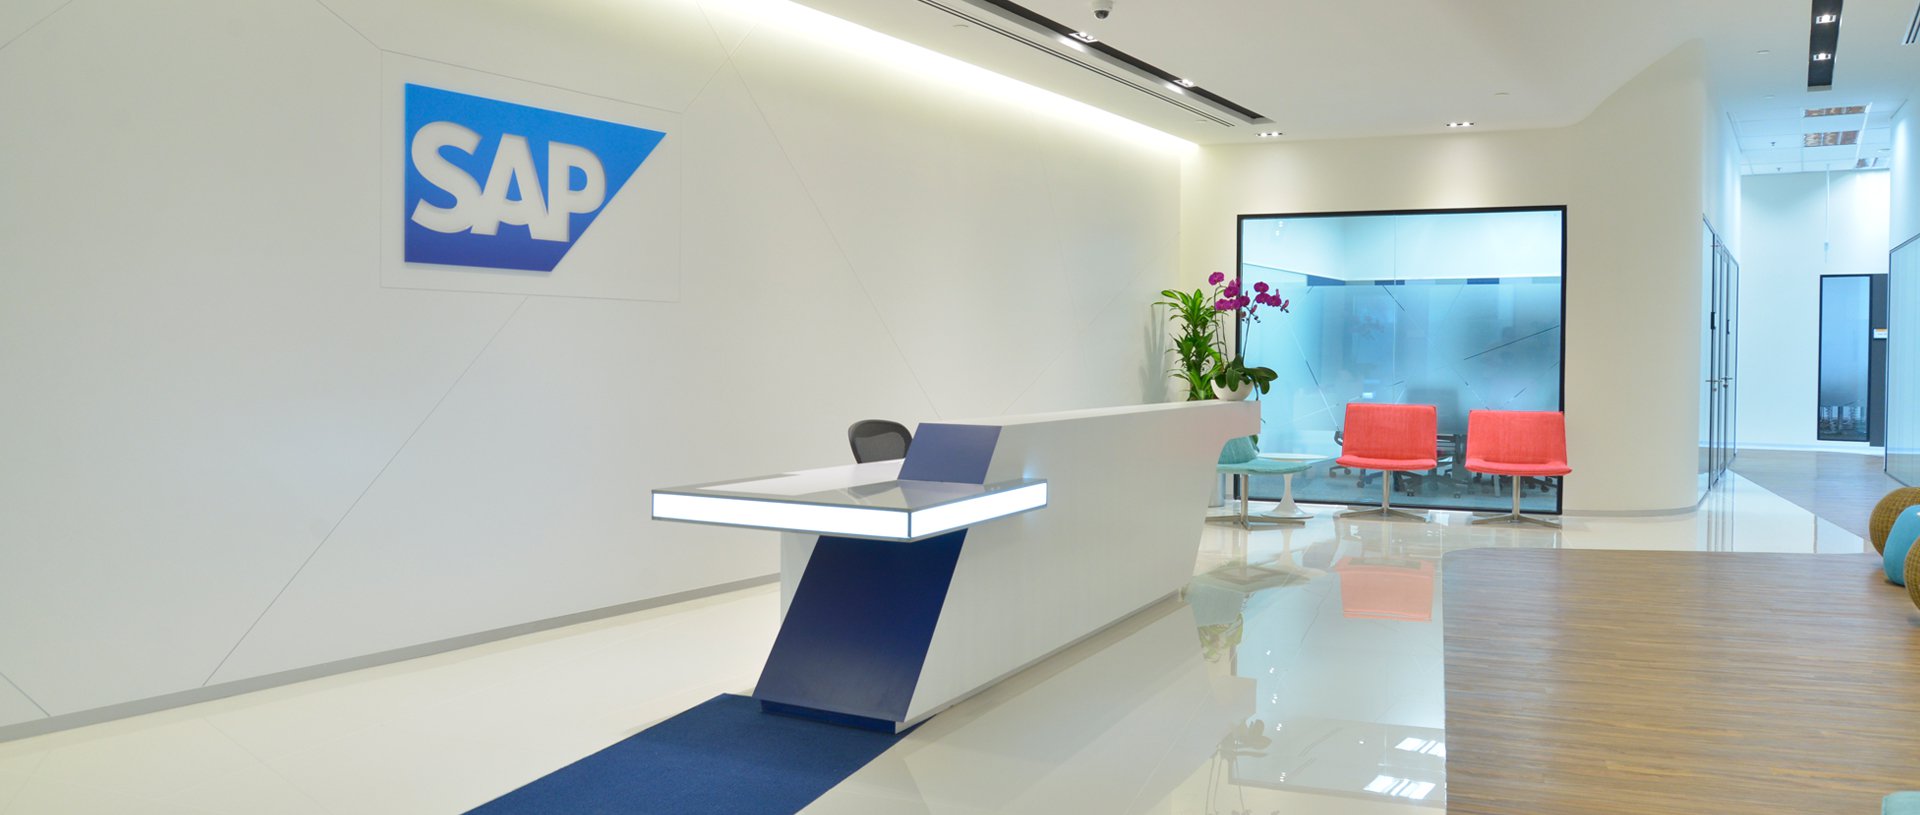 SAP Fined $100M